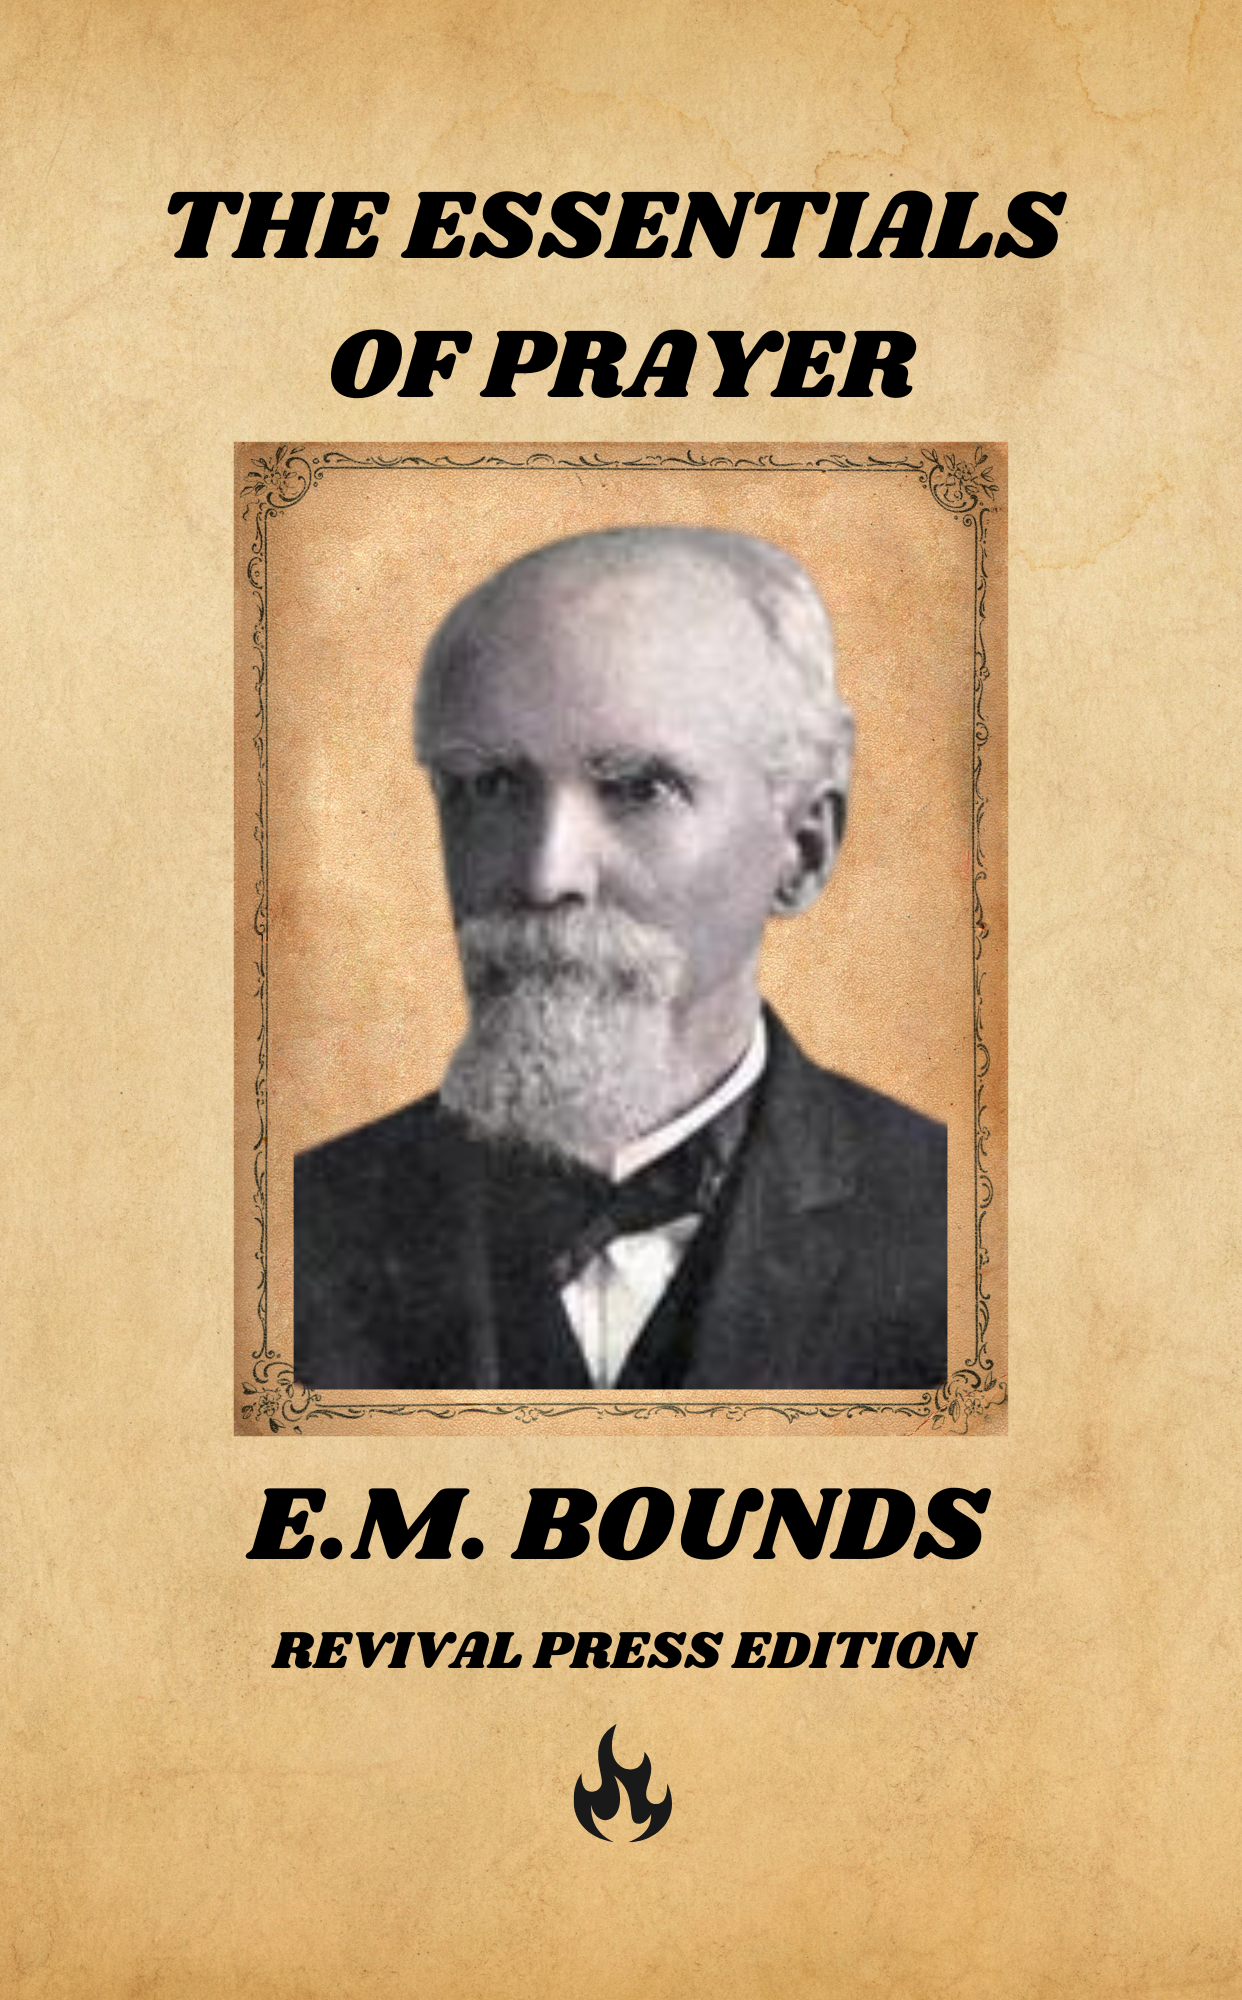 E.M. BOUNDS THE ESSENTIALS OF PRAYER (PAPERBACK OR HARDCOVER)